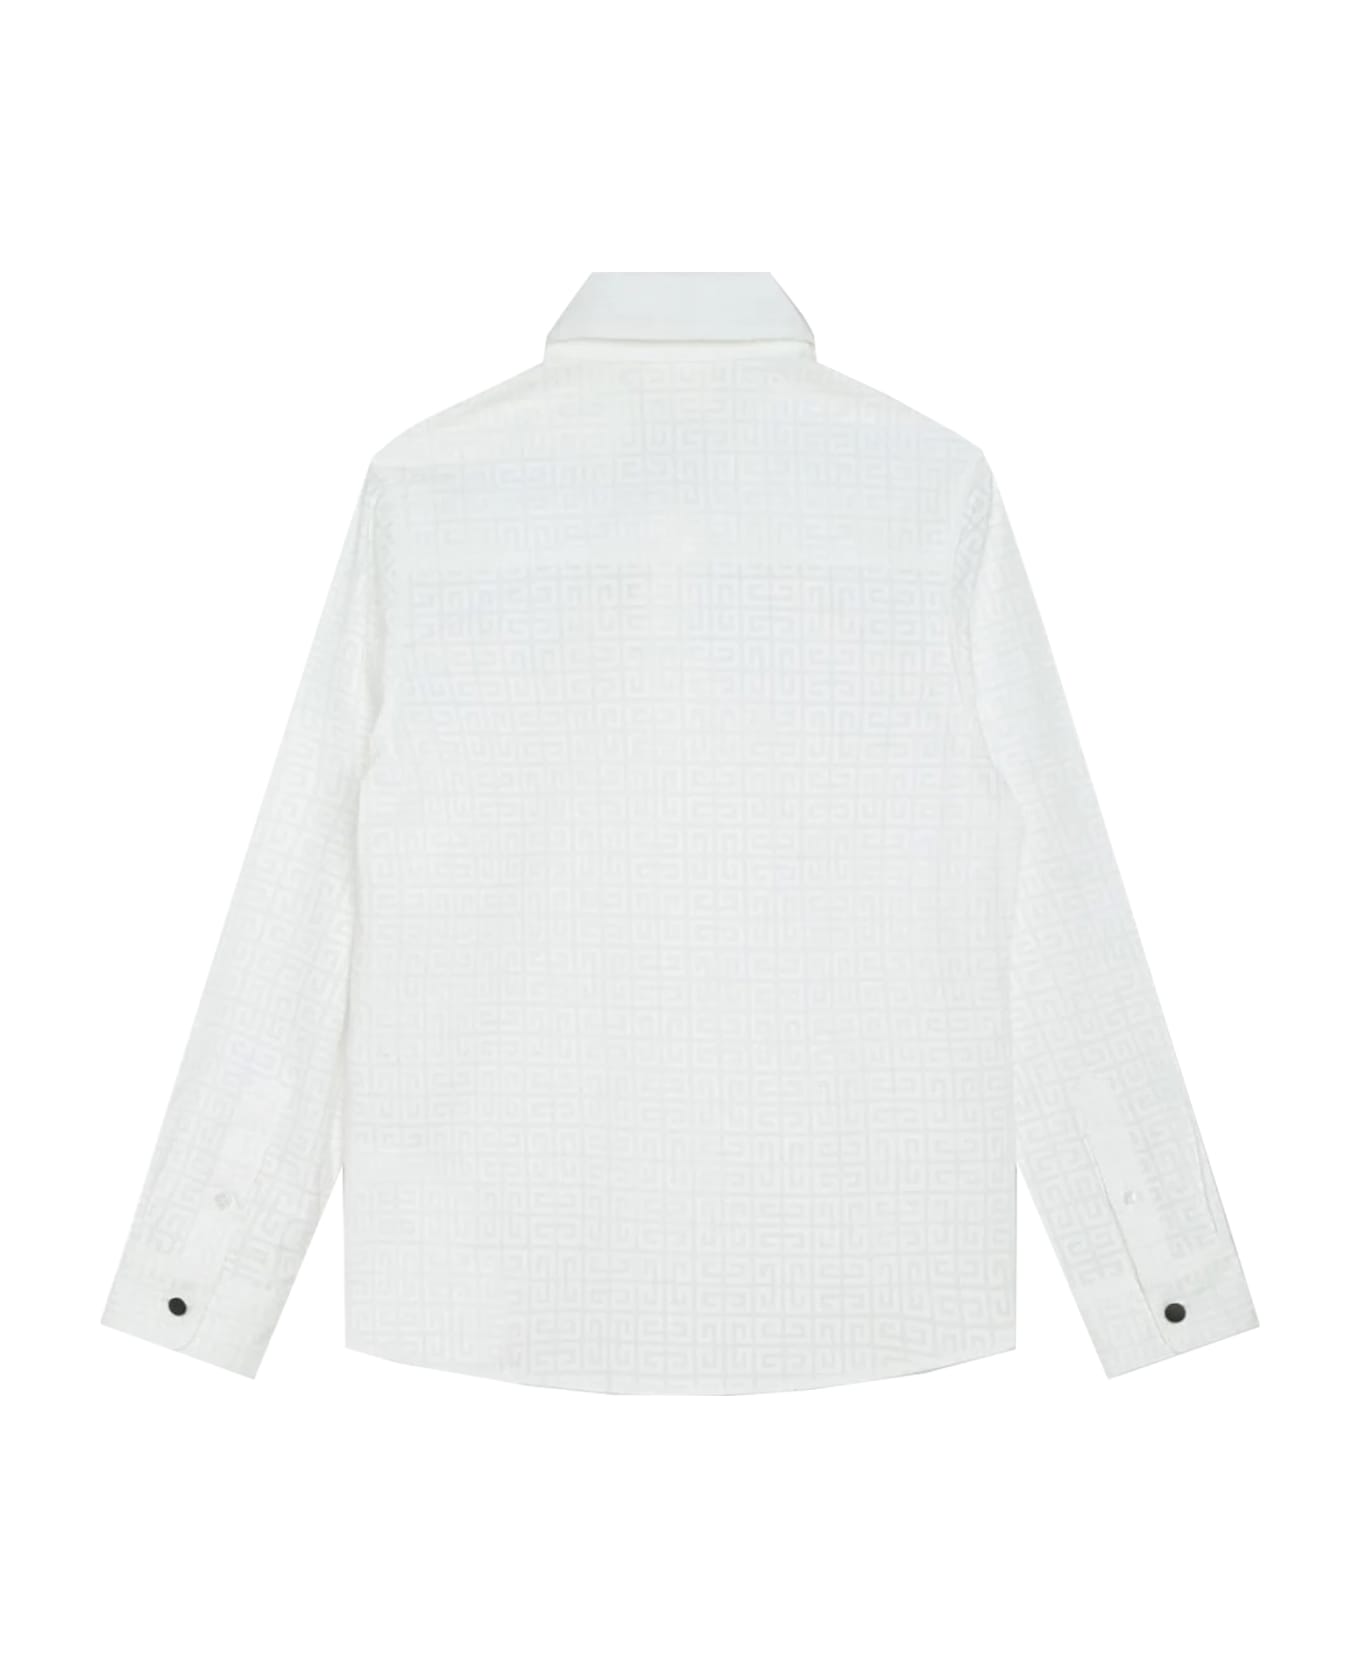 Givenchy Shirt - White シャツ